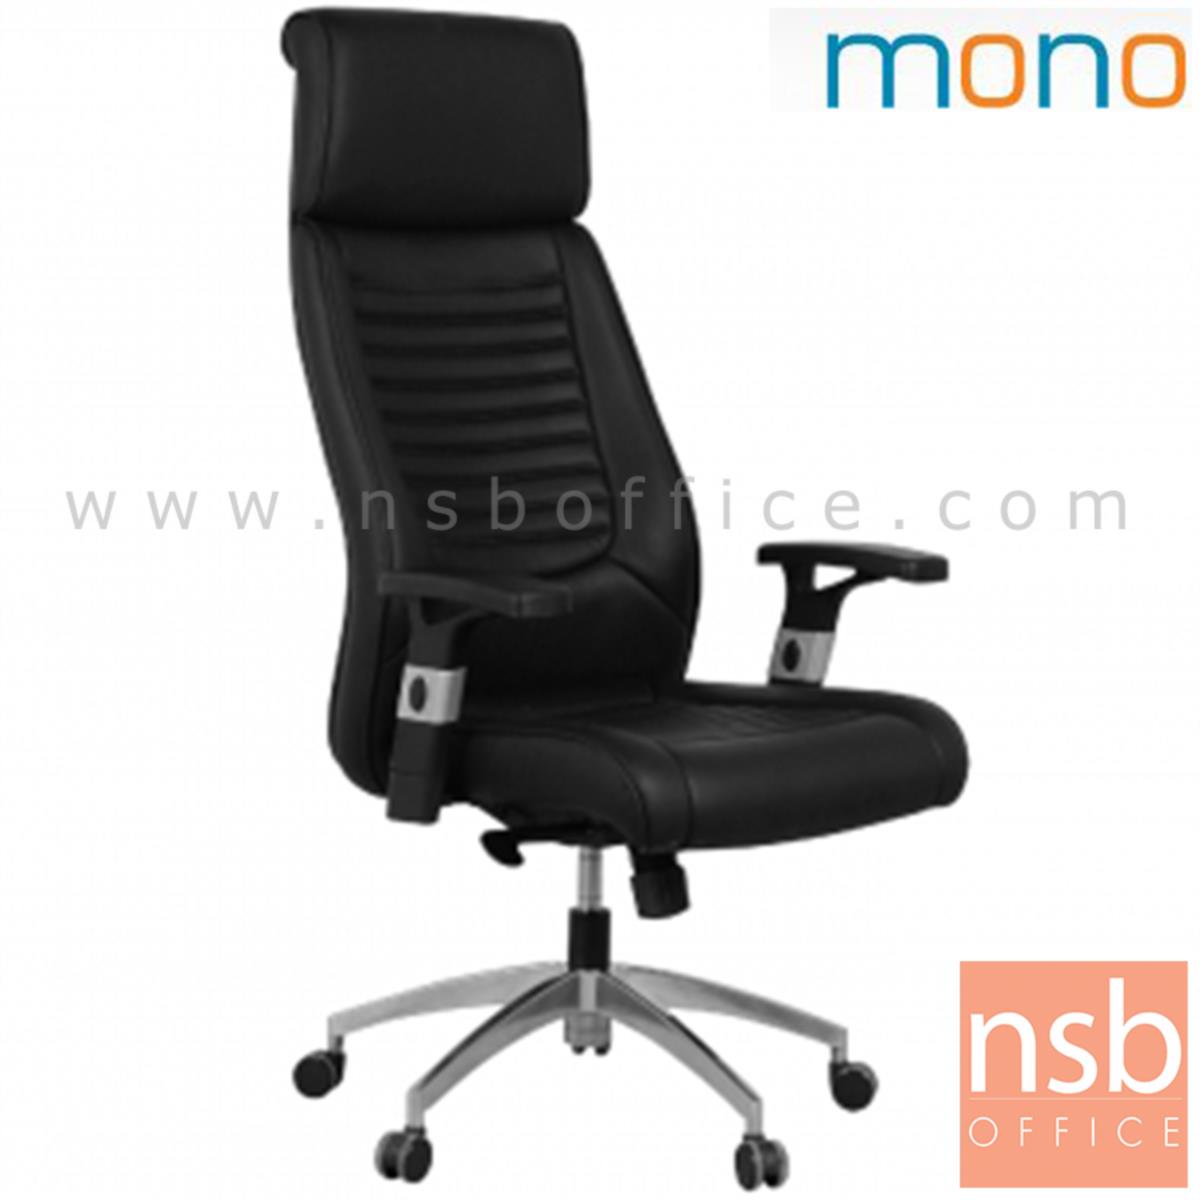 B01A481:เก้าอี้ผู้บริหารพนักพิงสูง รุ่น MN-SM66  โช๊คแก๊ส มีก้อนโยก ขาอลูมิเนียม